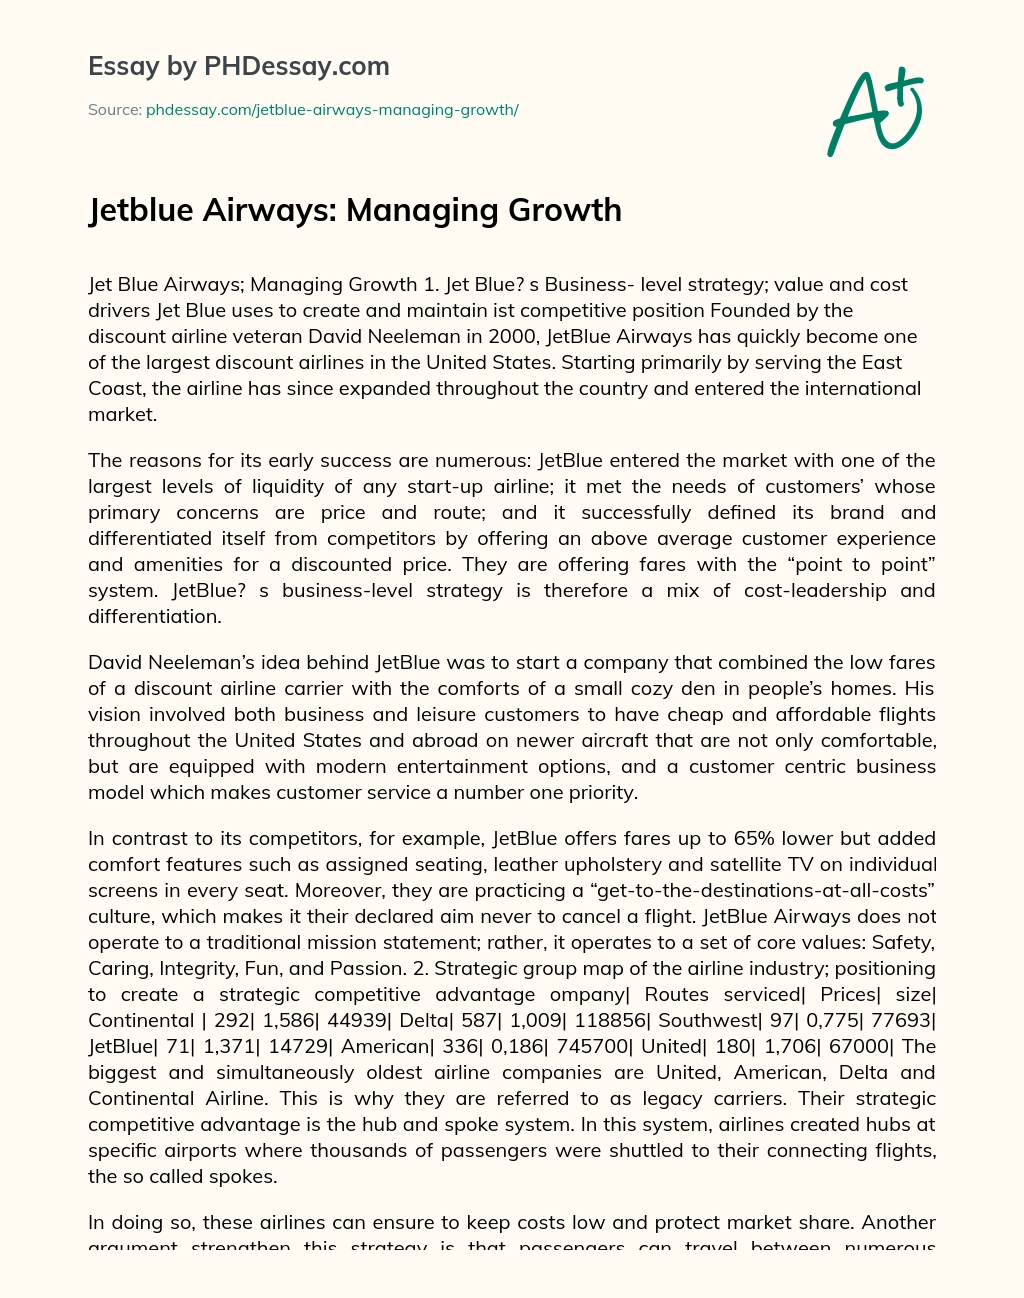 Jetblue Airways: Managing Growth essay